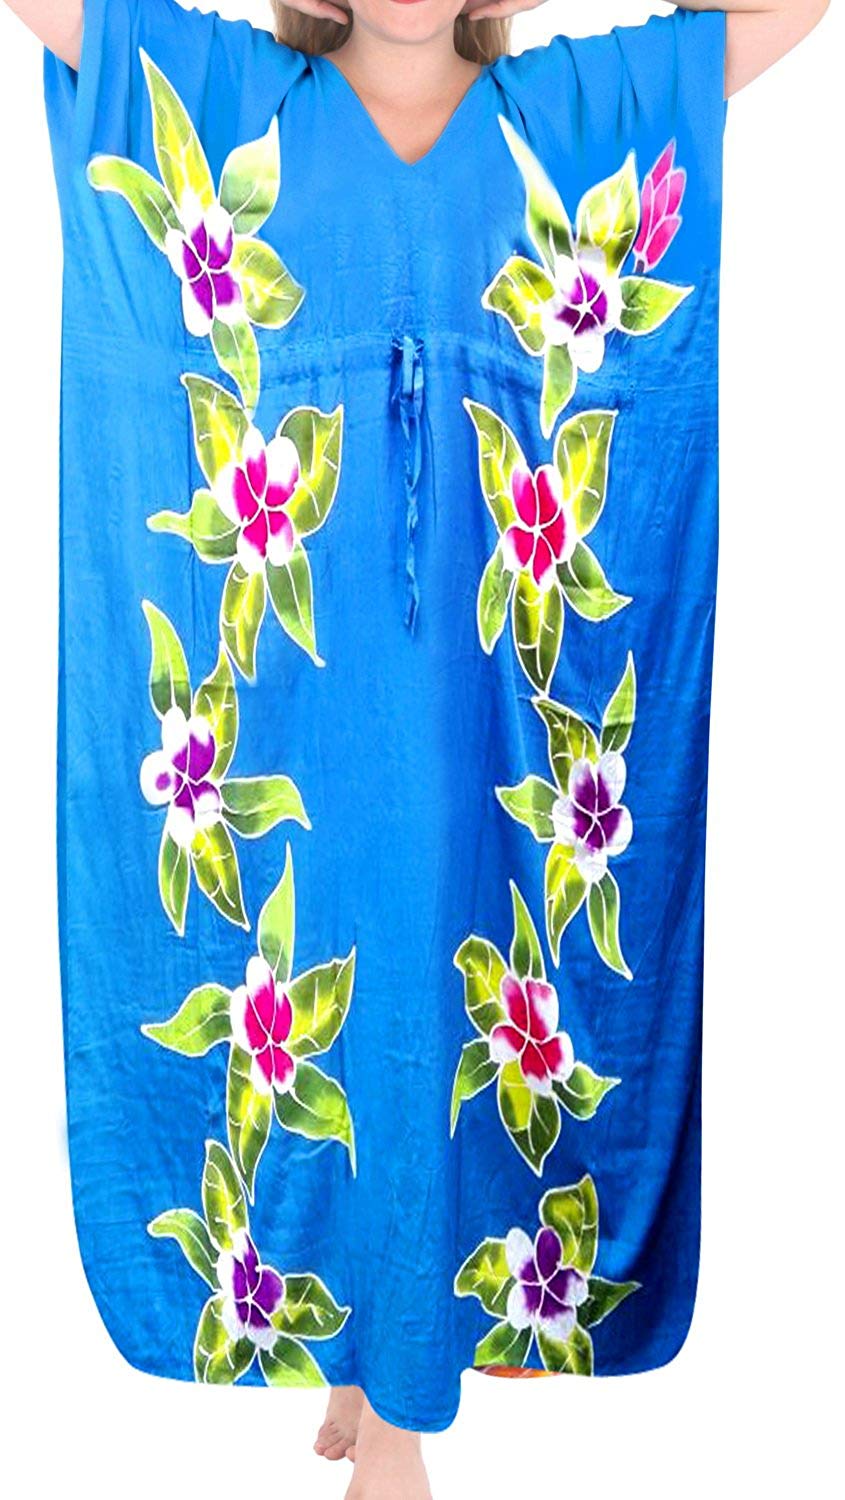 Women's Beachwear Sleeveless Rayon Evening Casual Caftan Casual Cover up Blue